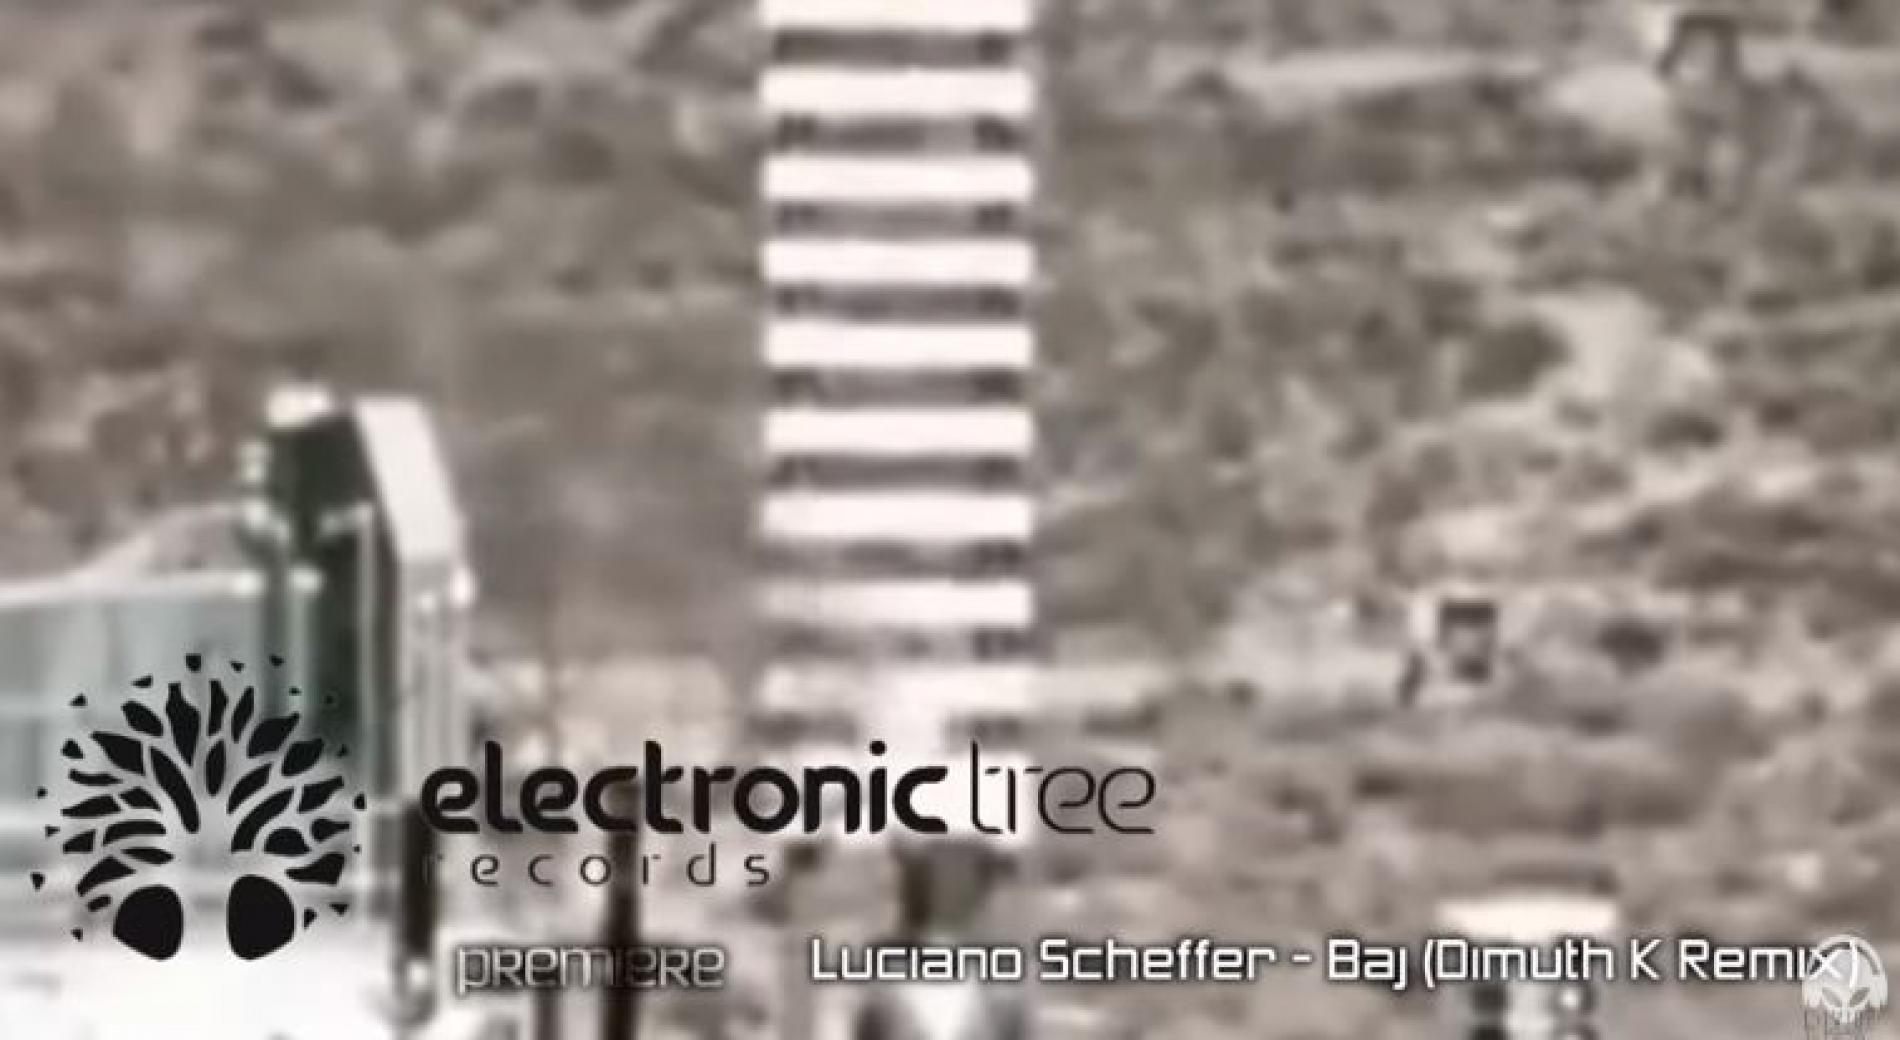 PREMIERE :Luciano Scheffer – Baj (Dimuth K Remix) [Electronic Tree]